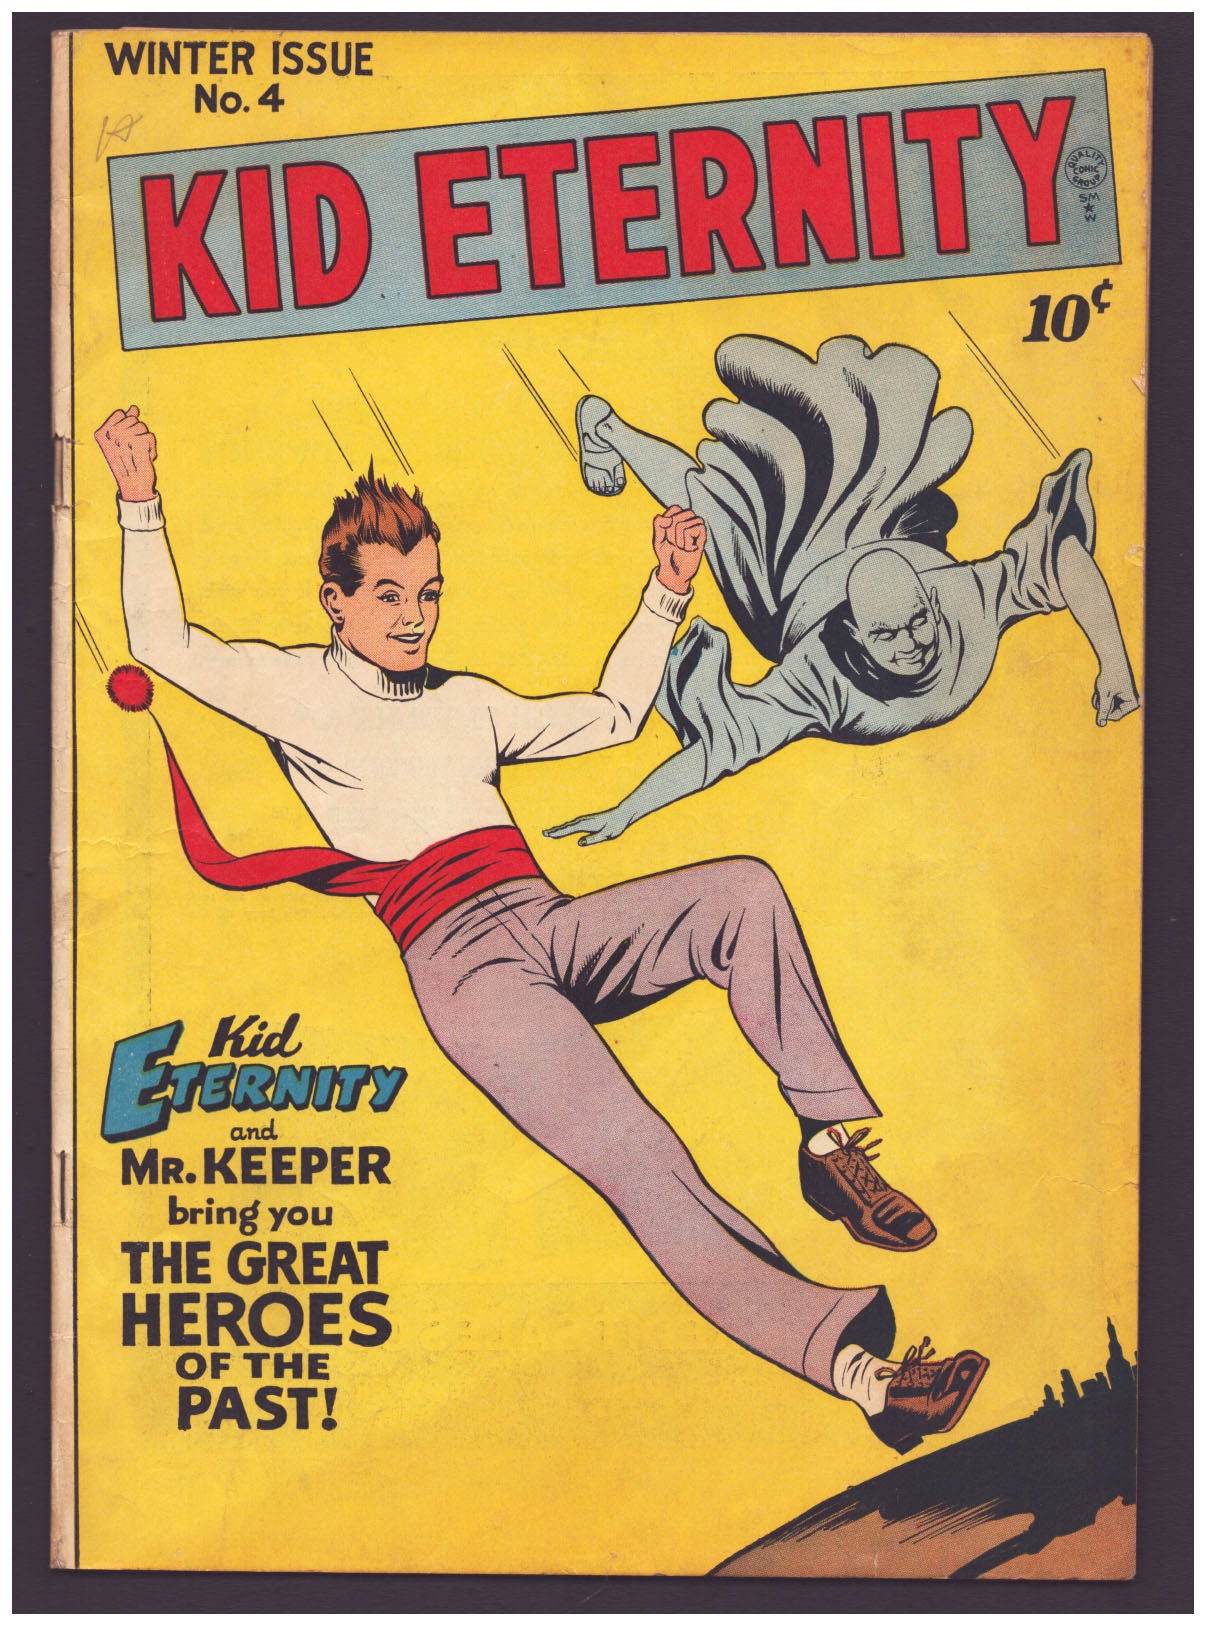 Millard, Joe; Stahl, Al and others - Kid Eternity Winter Issue No. 4